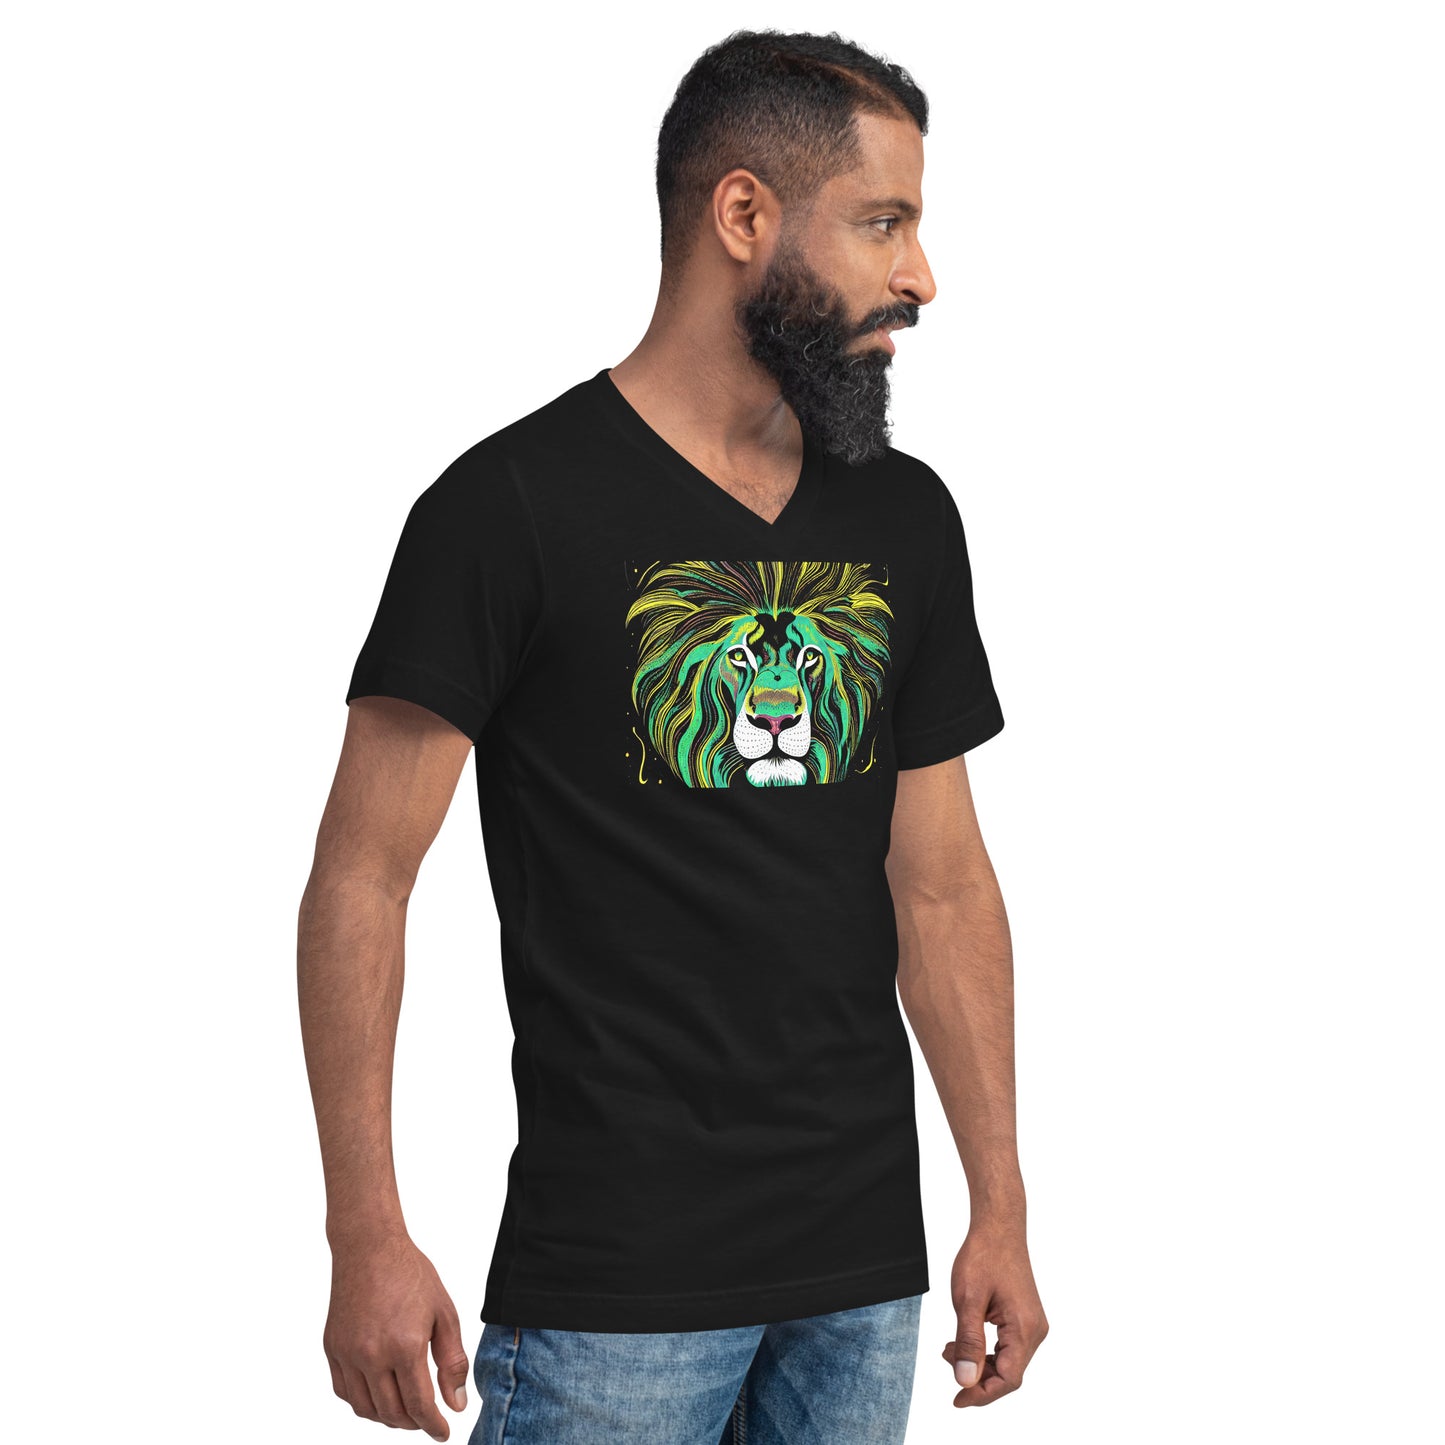 "Are You Lion?" V-Neck T-Shirt